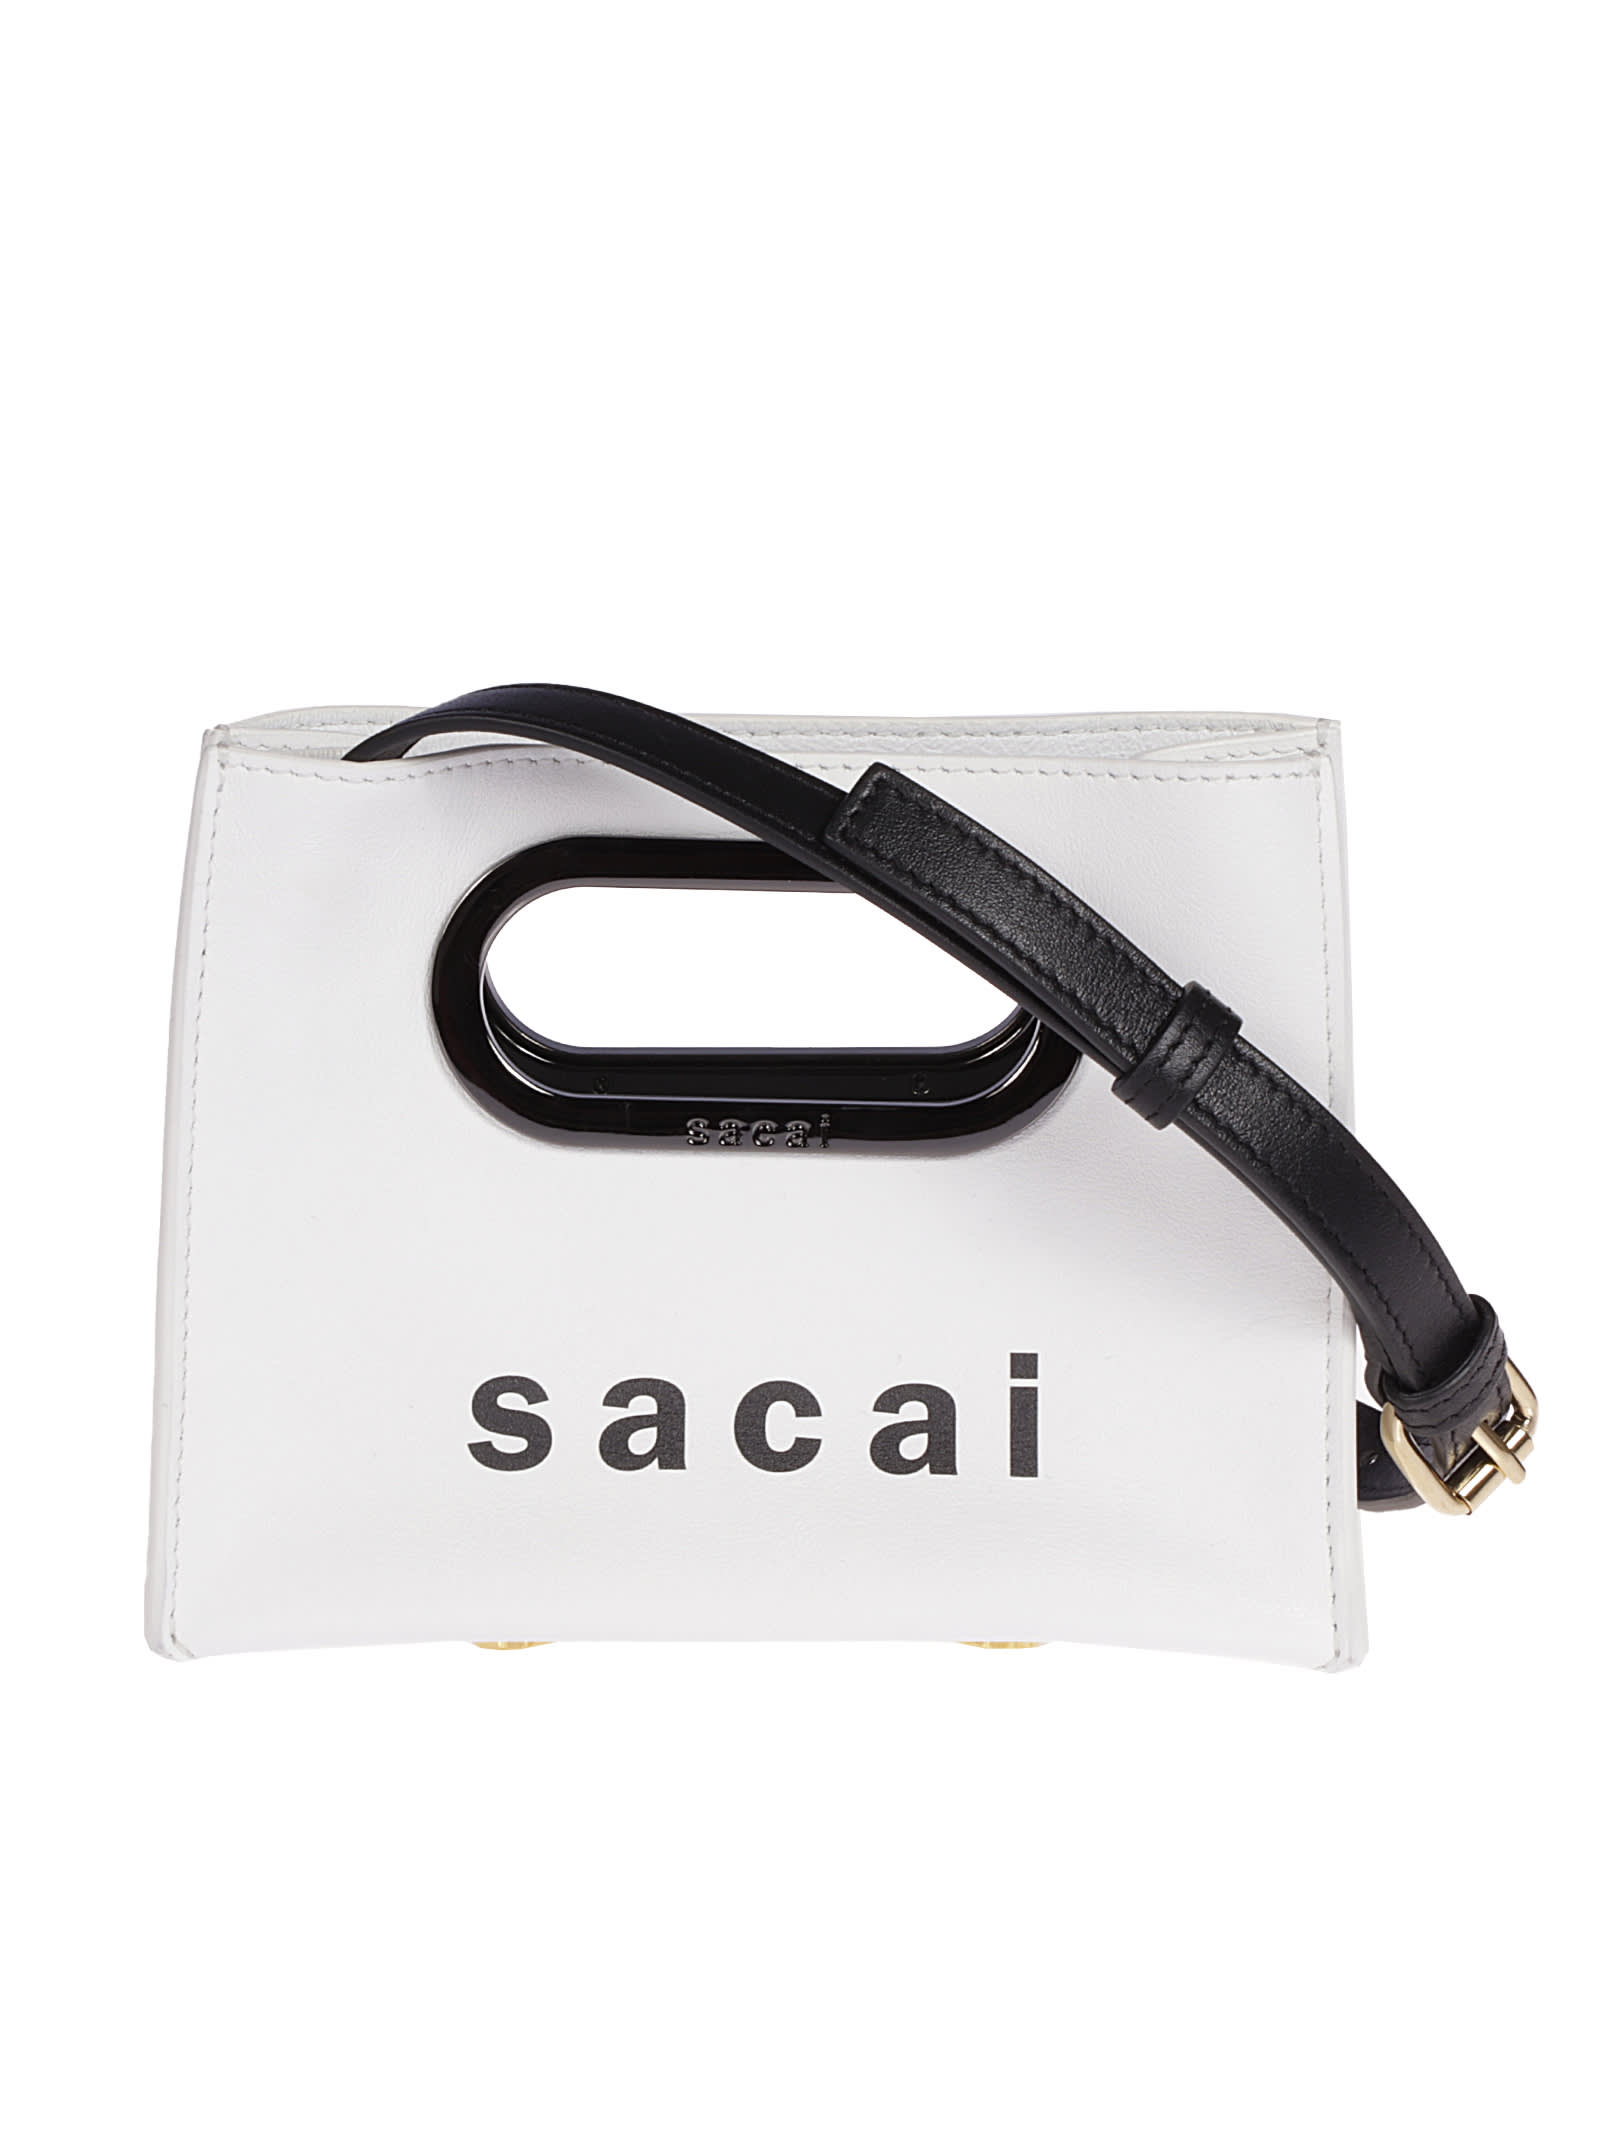 Sacai New Shopper Bag Micro